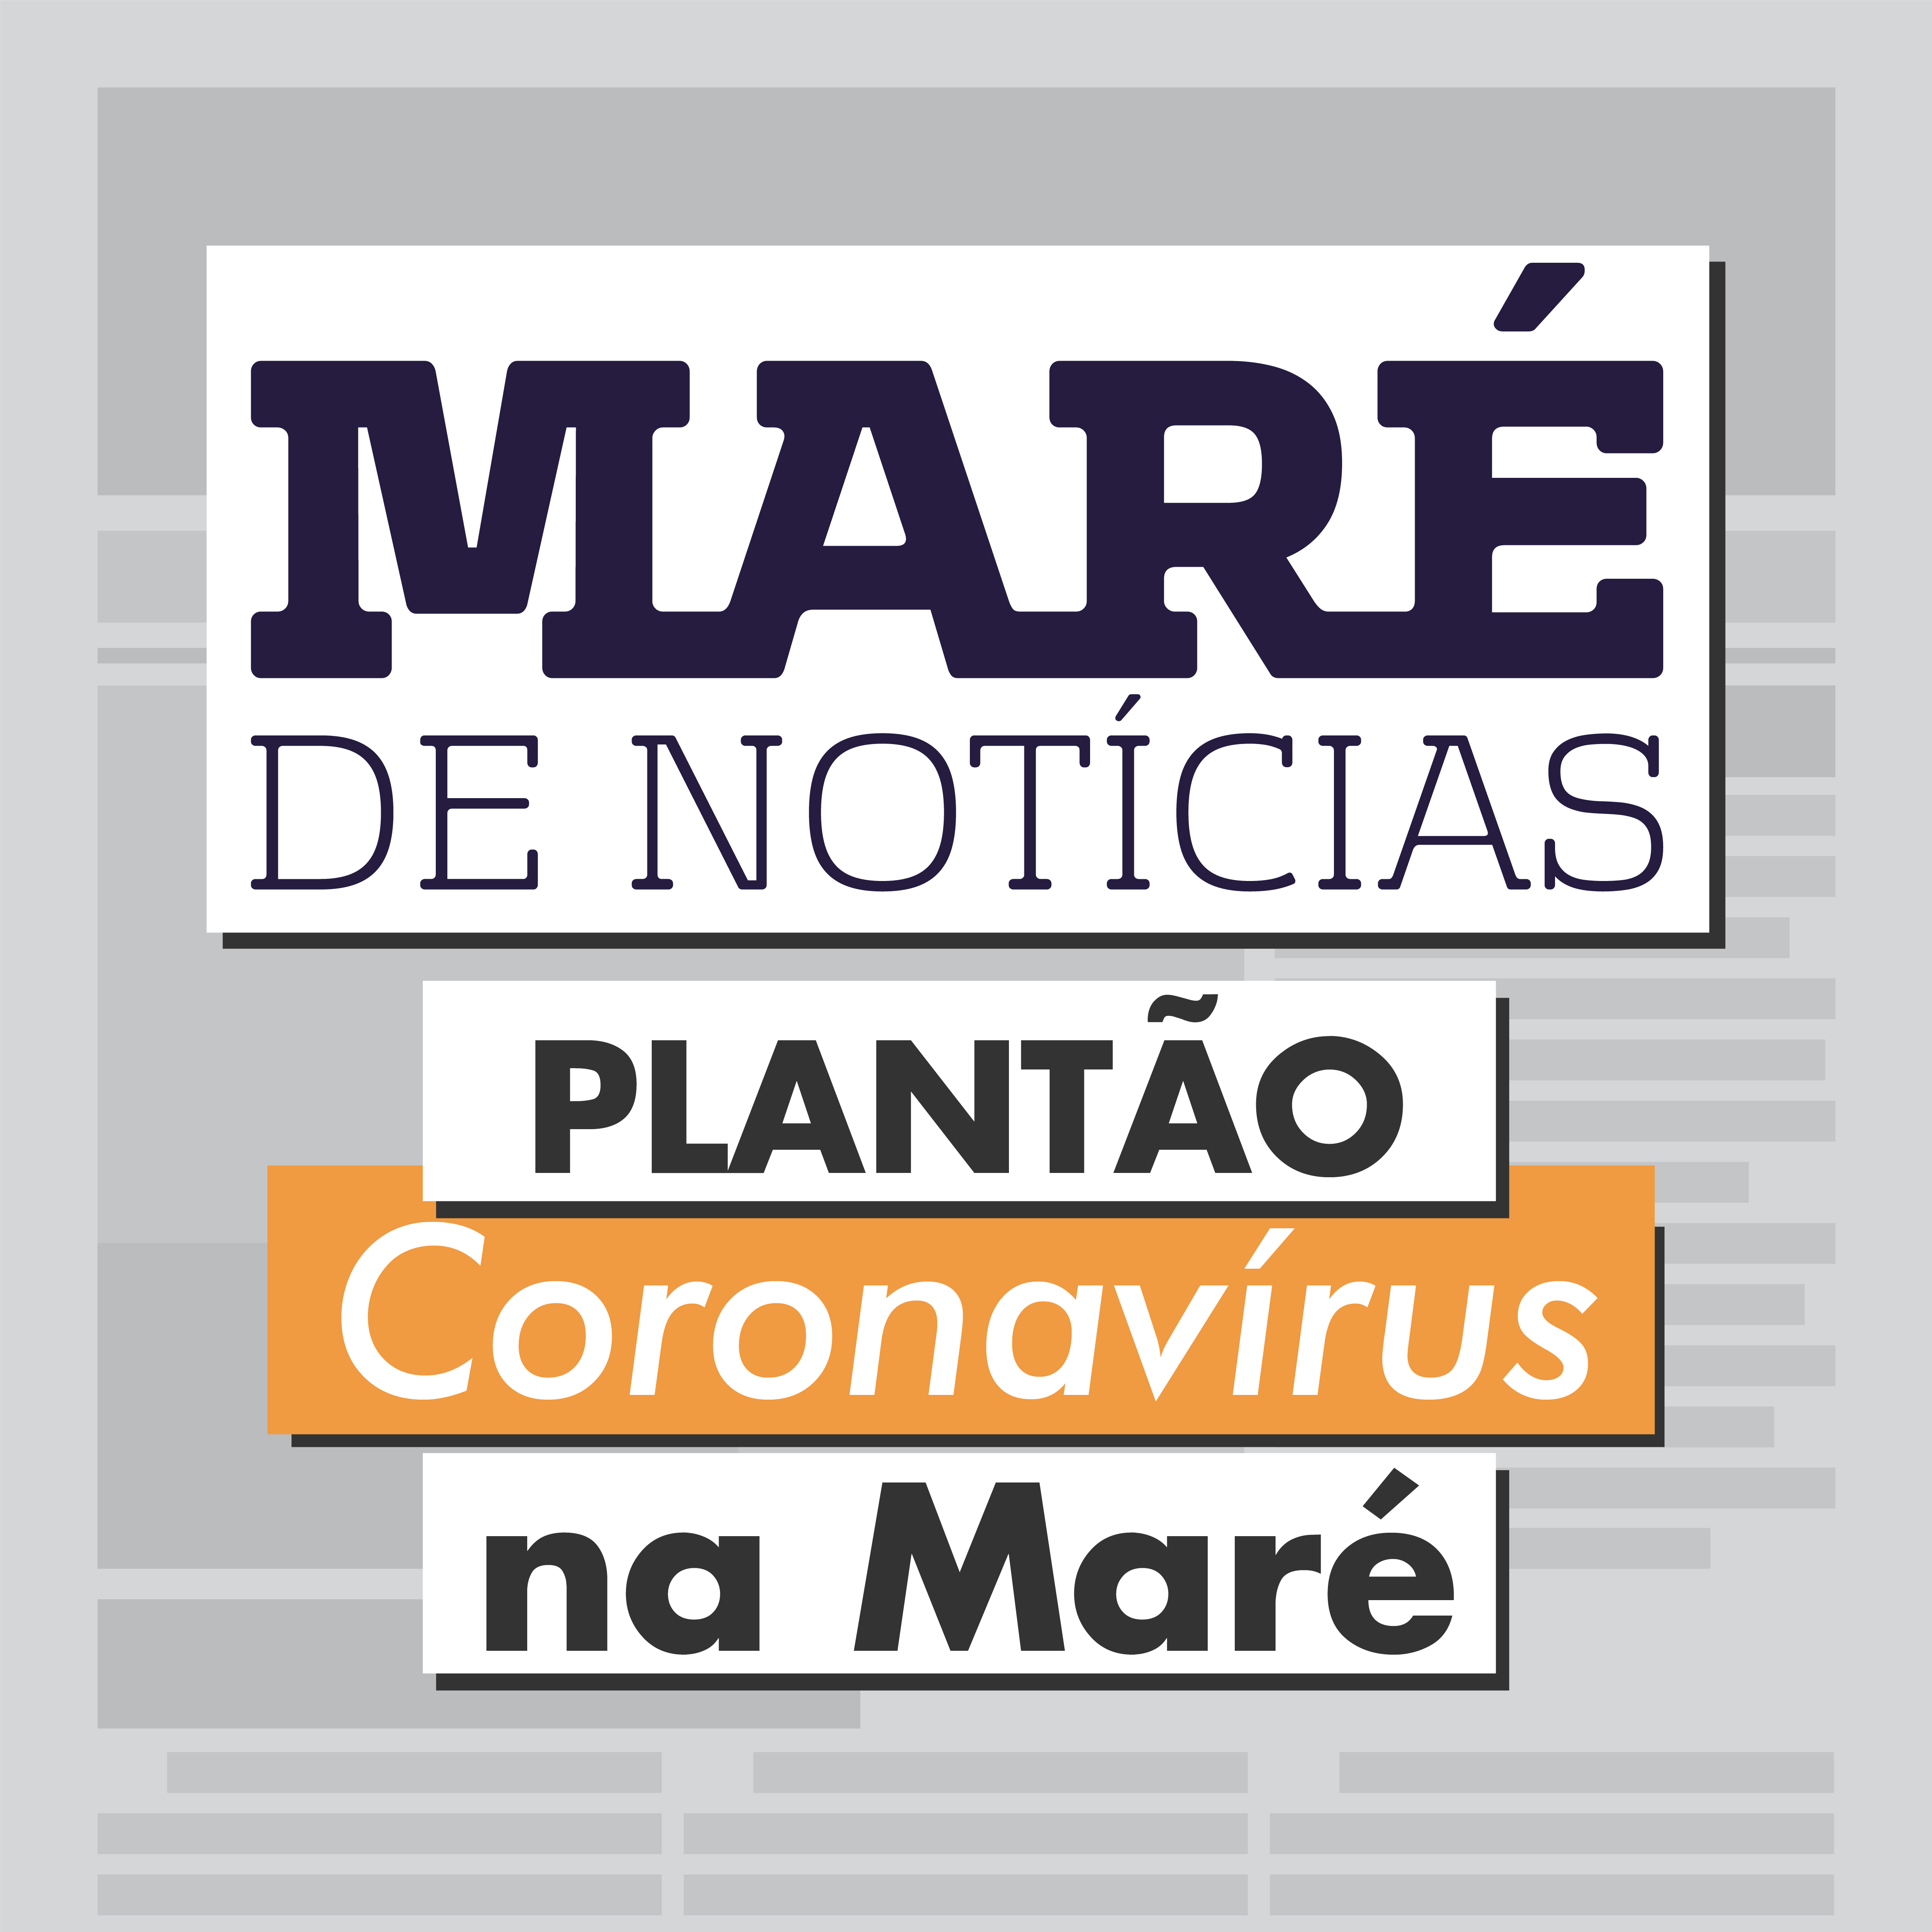  Ronda Coronavírus: Covid-19 avança no Rio de Janeiro